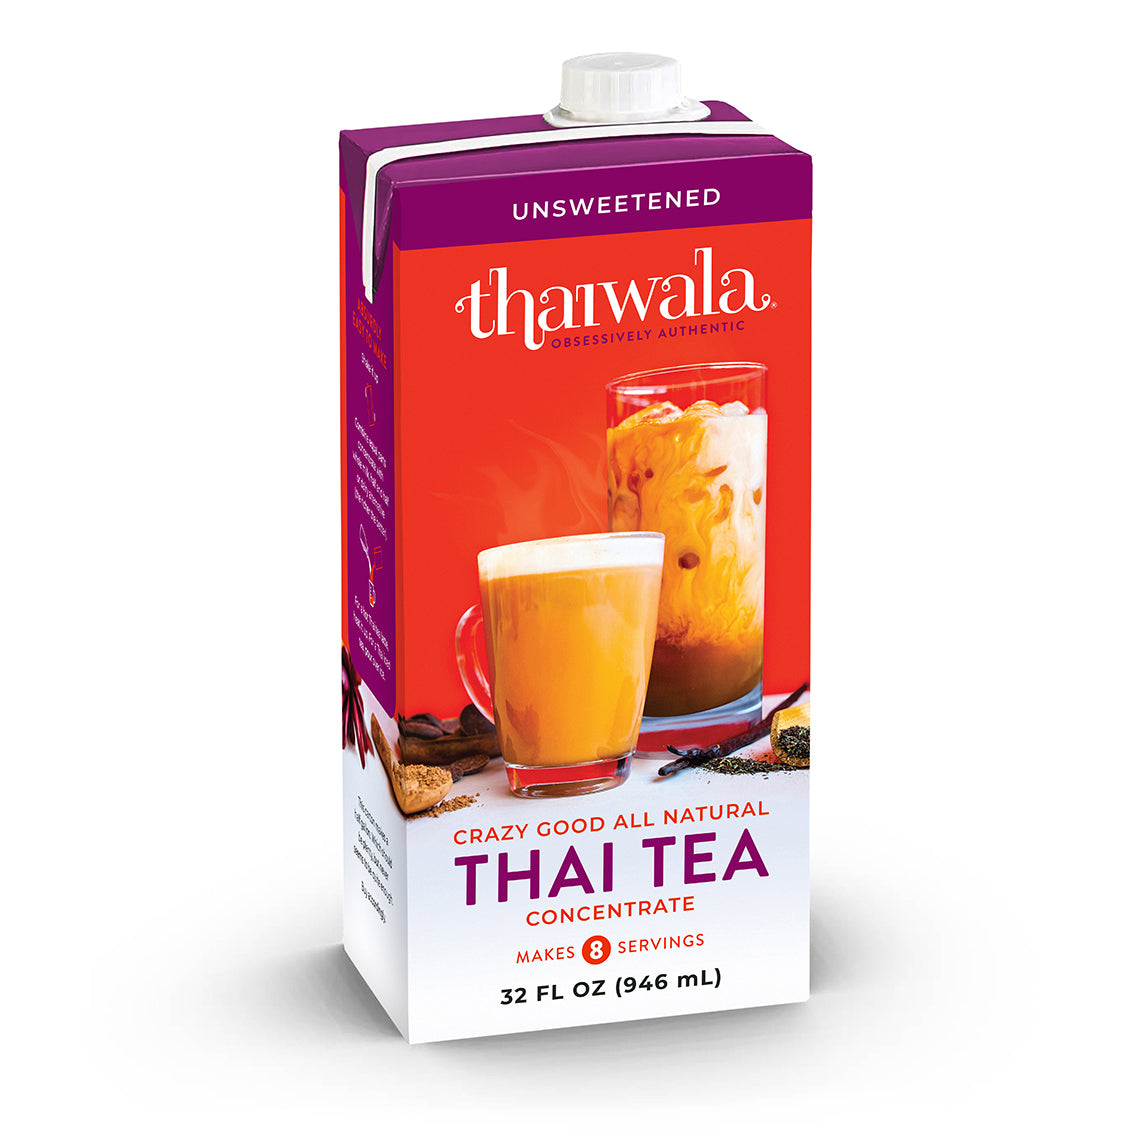 Thaiwala Thai Tea Concentrate: Unsweetened - 32oz Carton